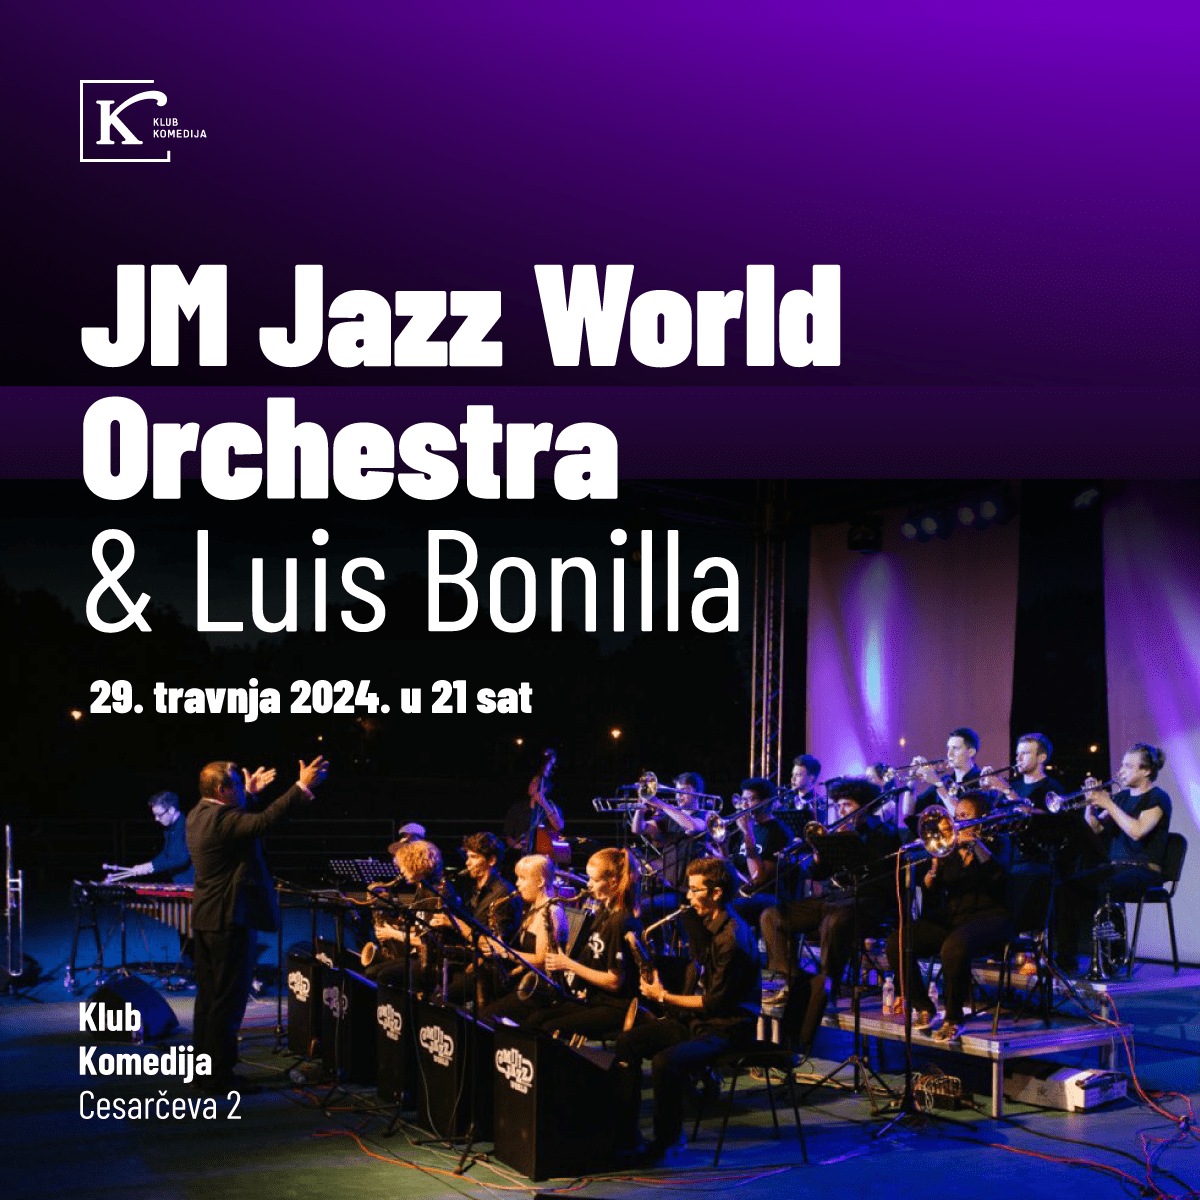 JM Jazz World Orchestra & Luis Bonilla